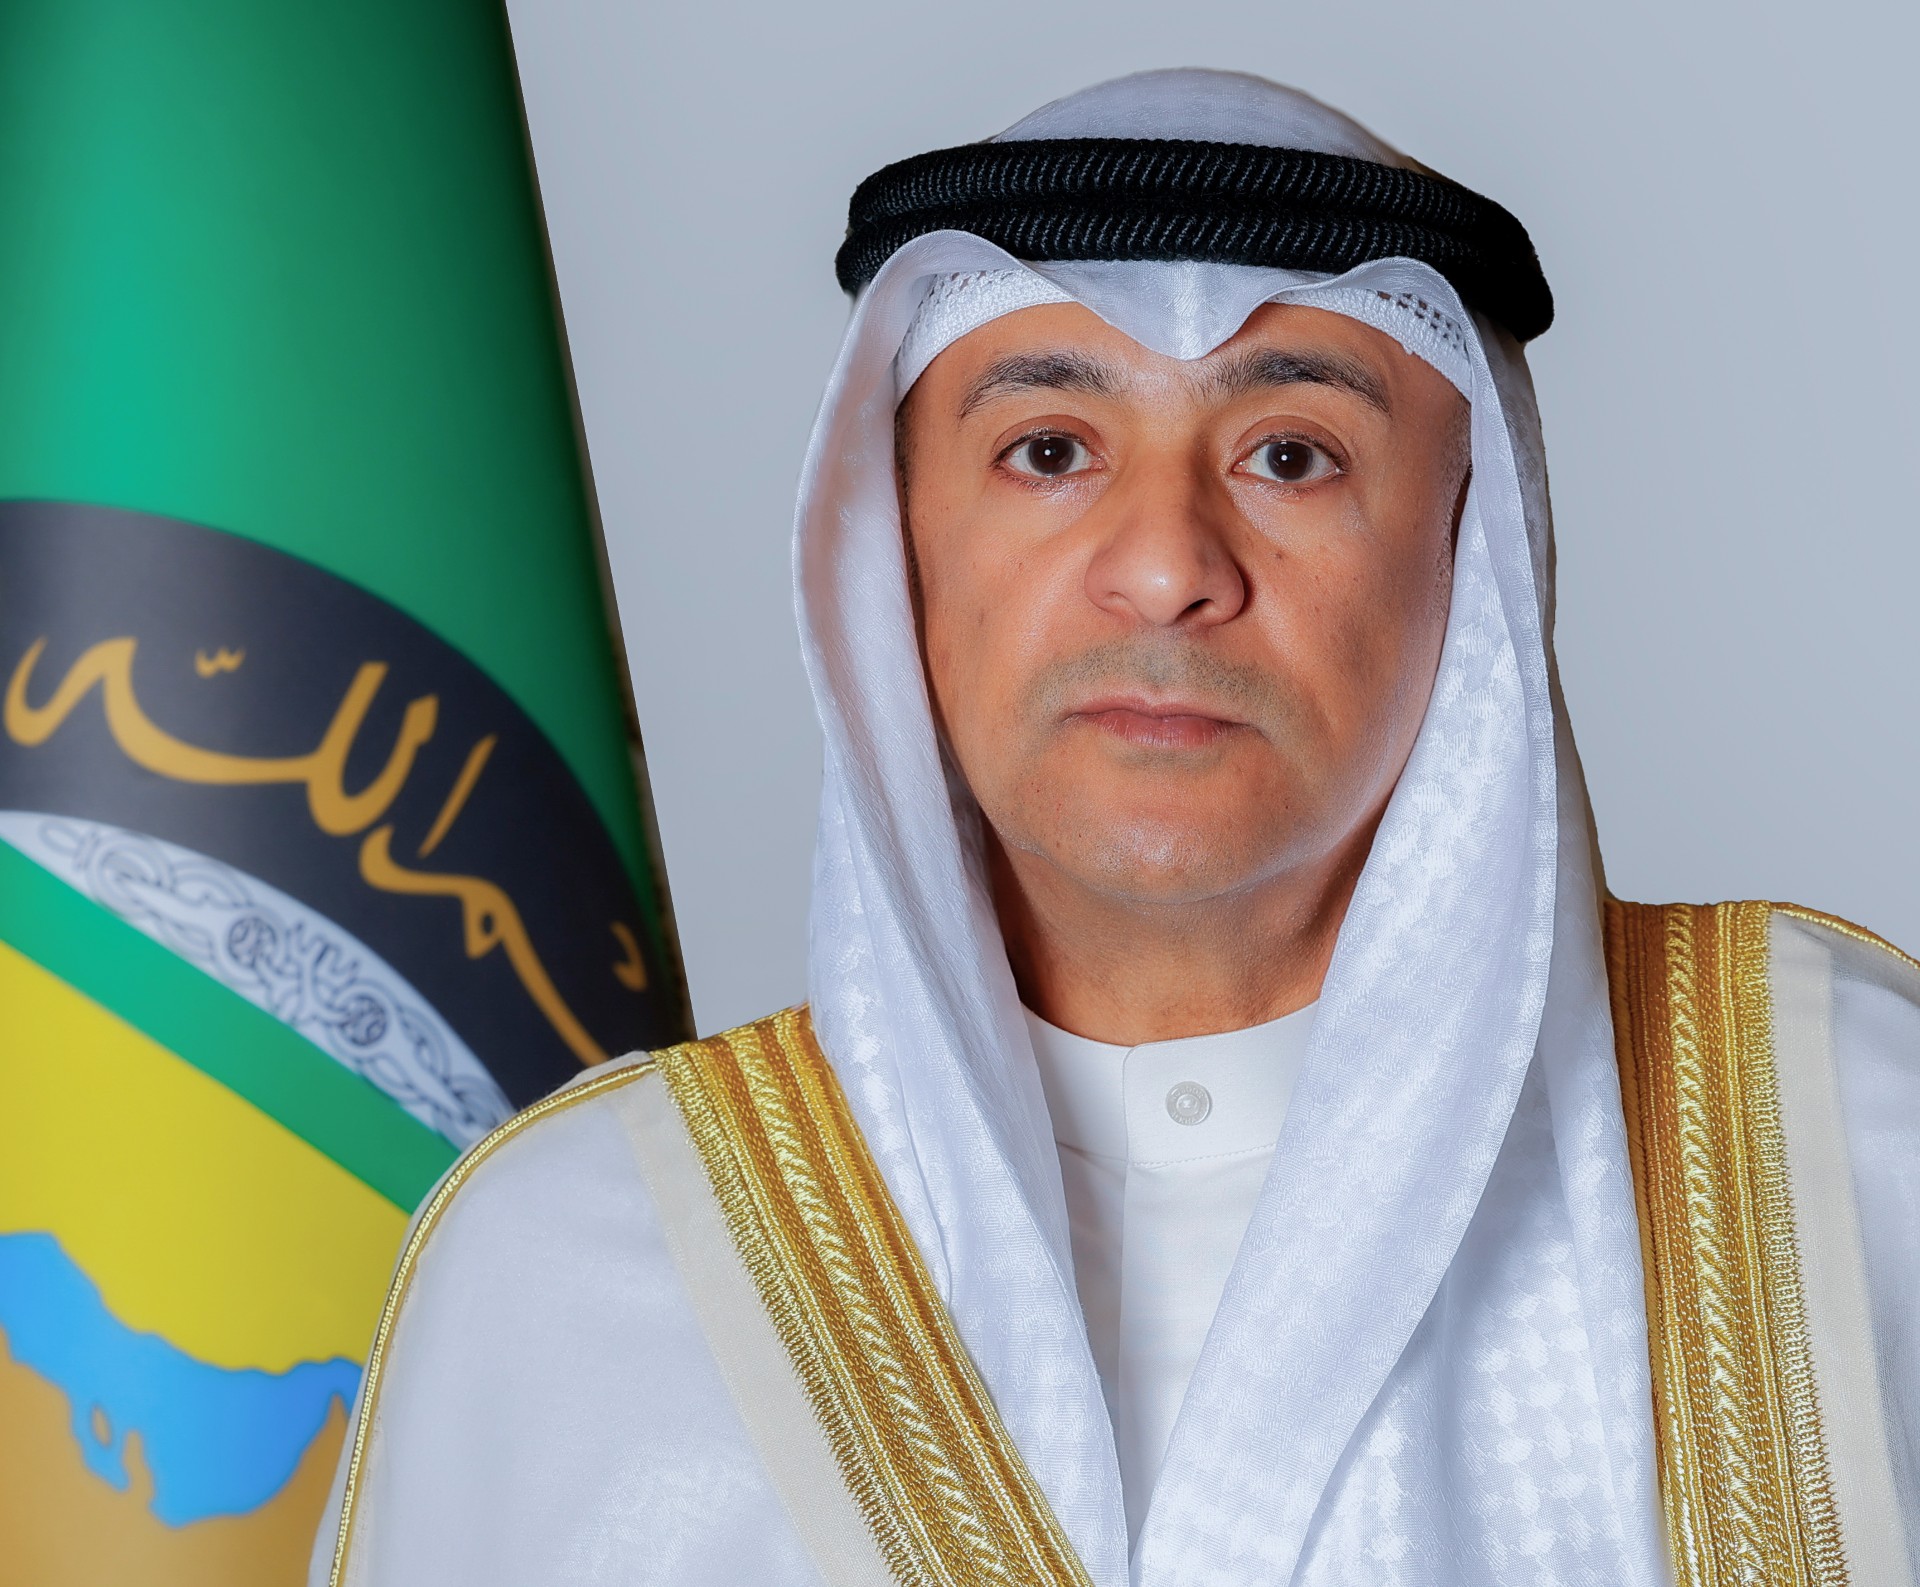 The Secretary-General of the Gulf Cooperation Council (GCC), Jassem Al-Budaiwi